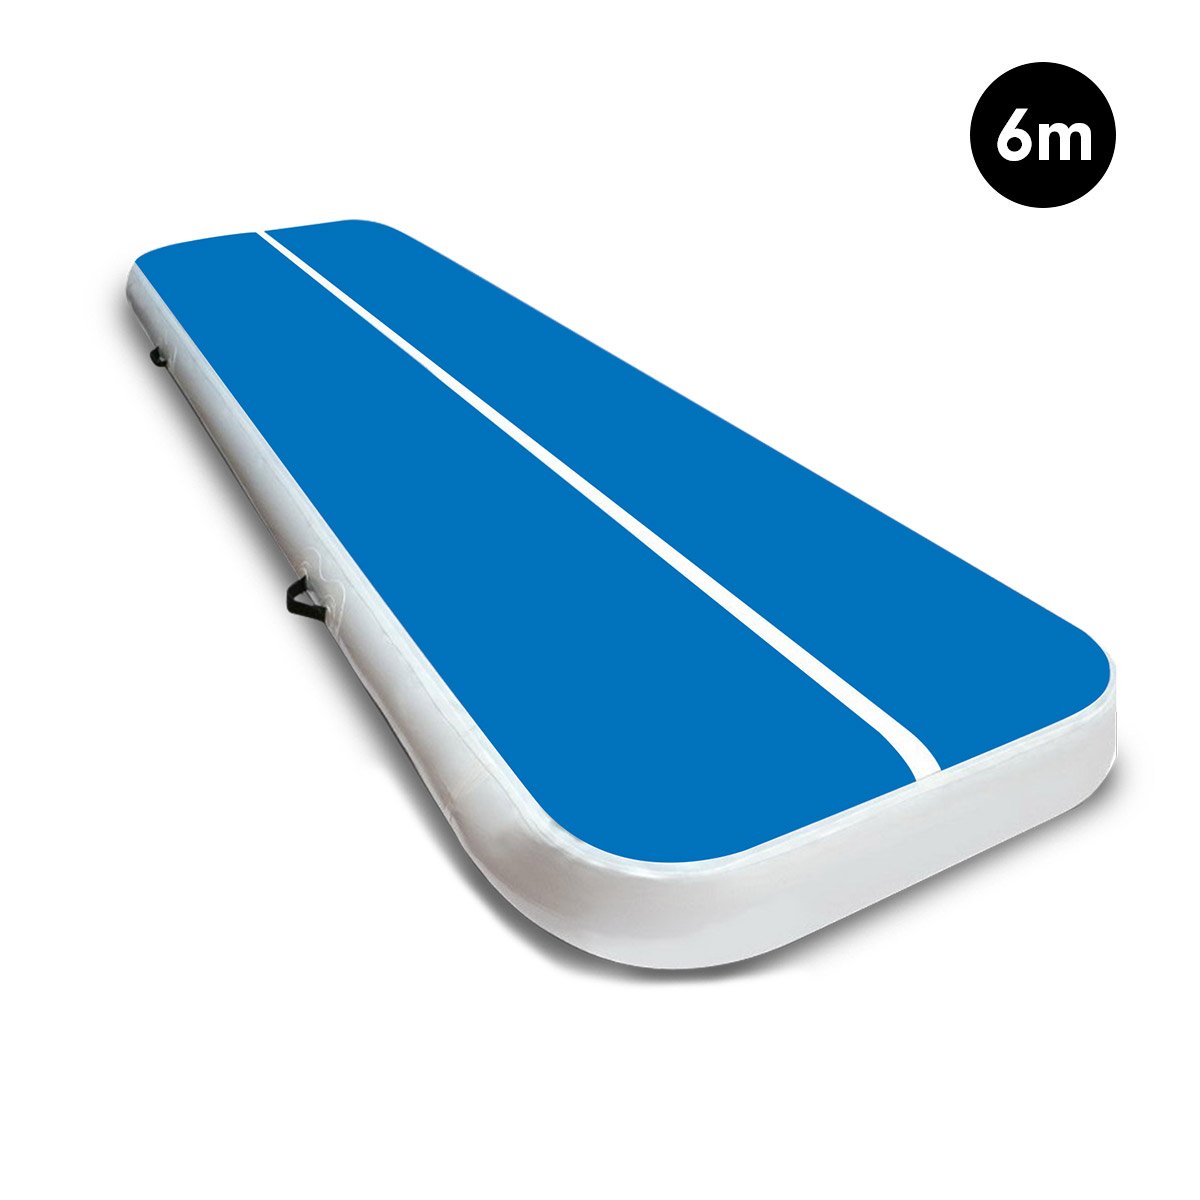 6m x 1m Air Track Inflatable Tumbling Gymnastics Mat - Blue White 2